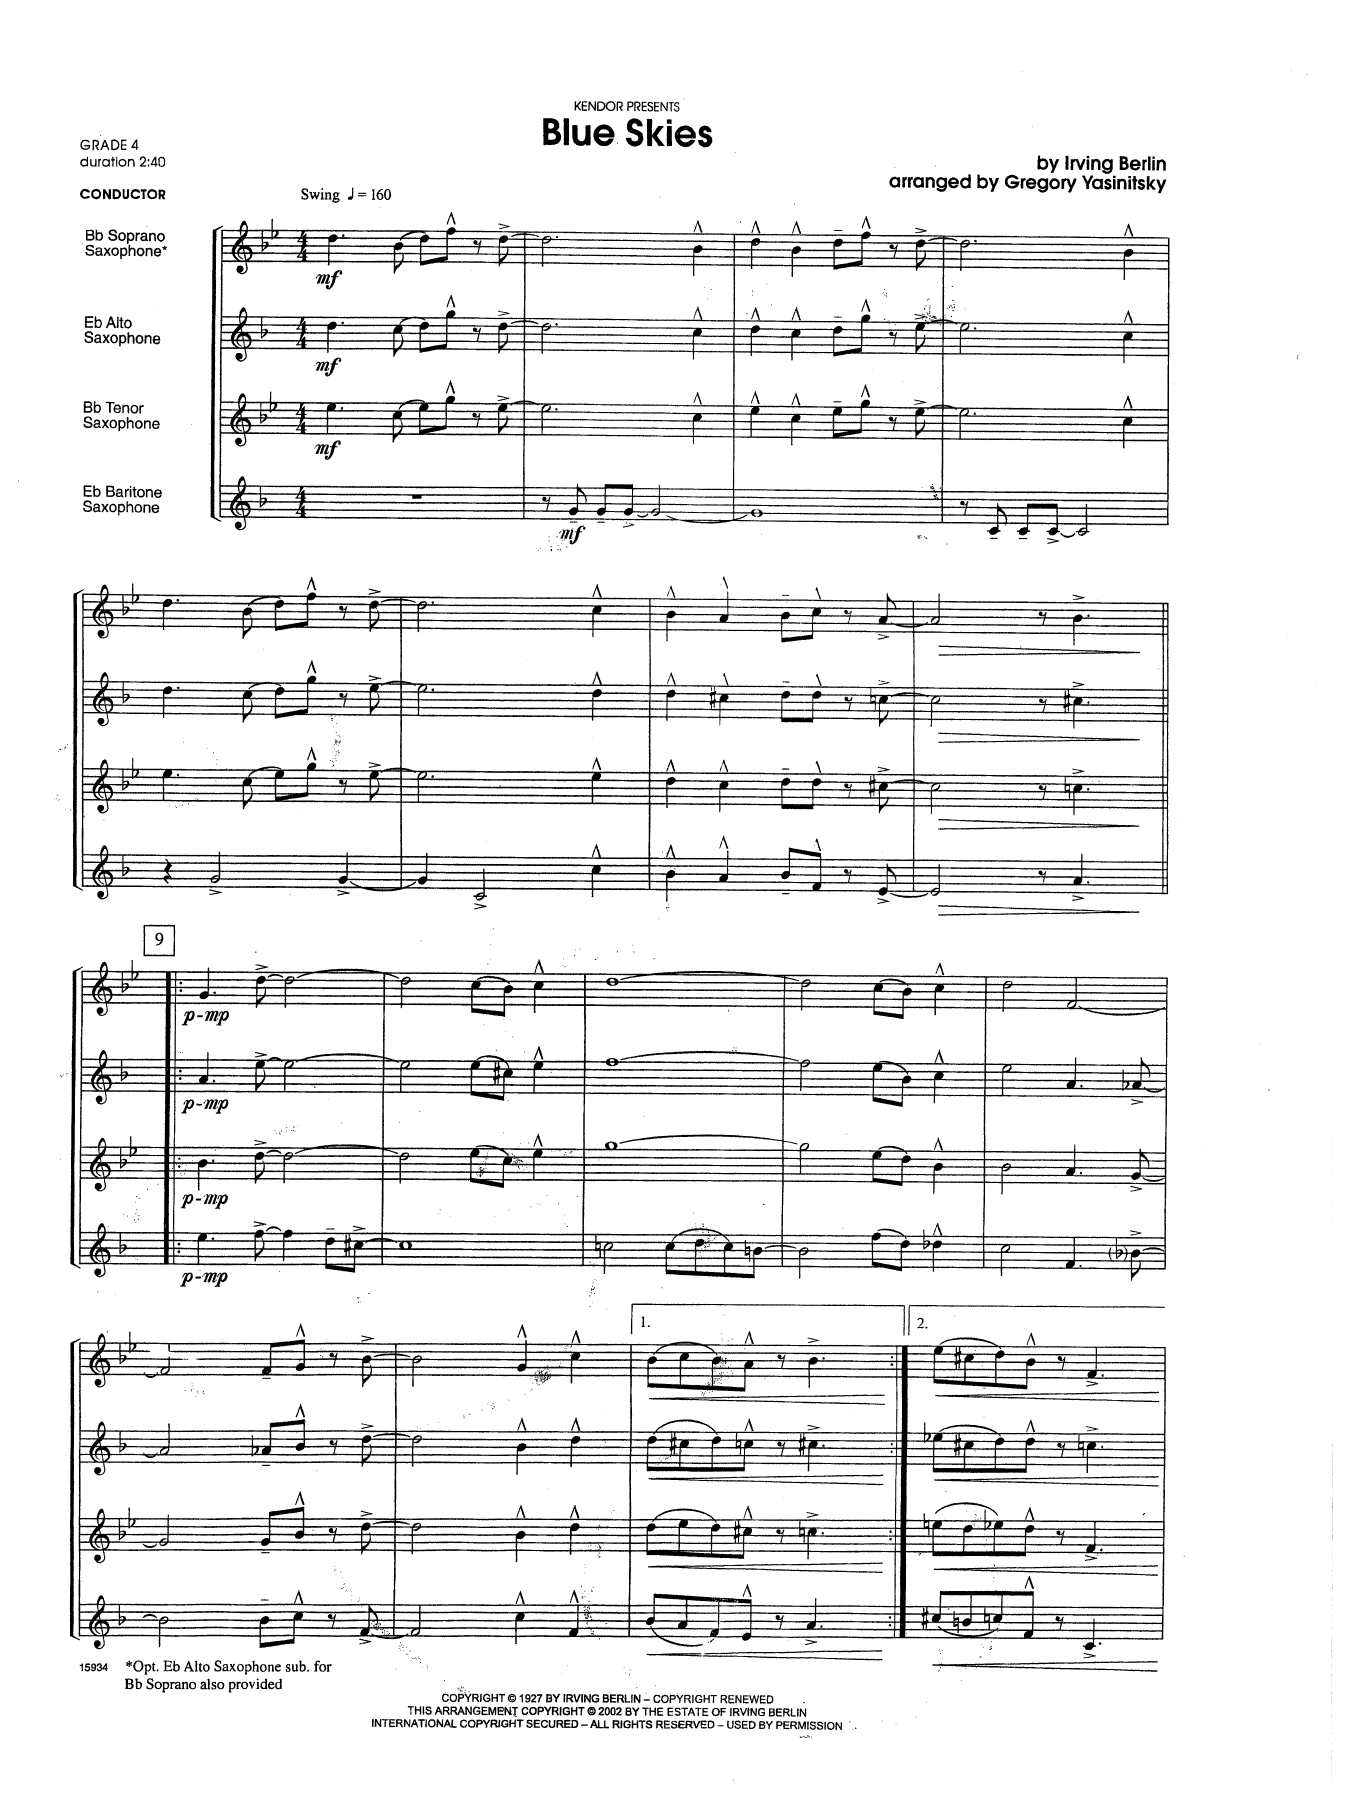 Download Gregory Yasinitsky Blue Skies - Full Score Sheet Music